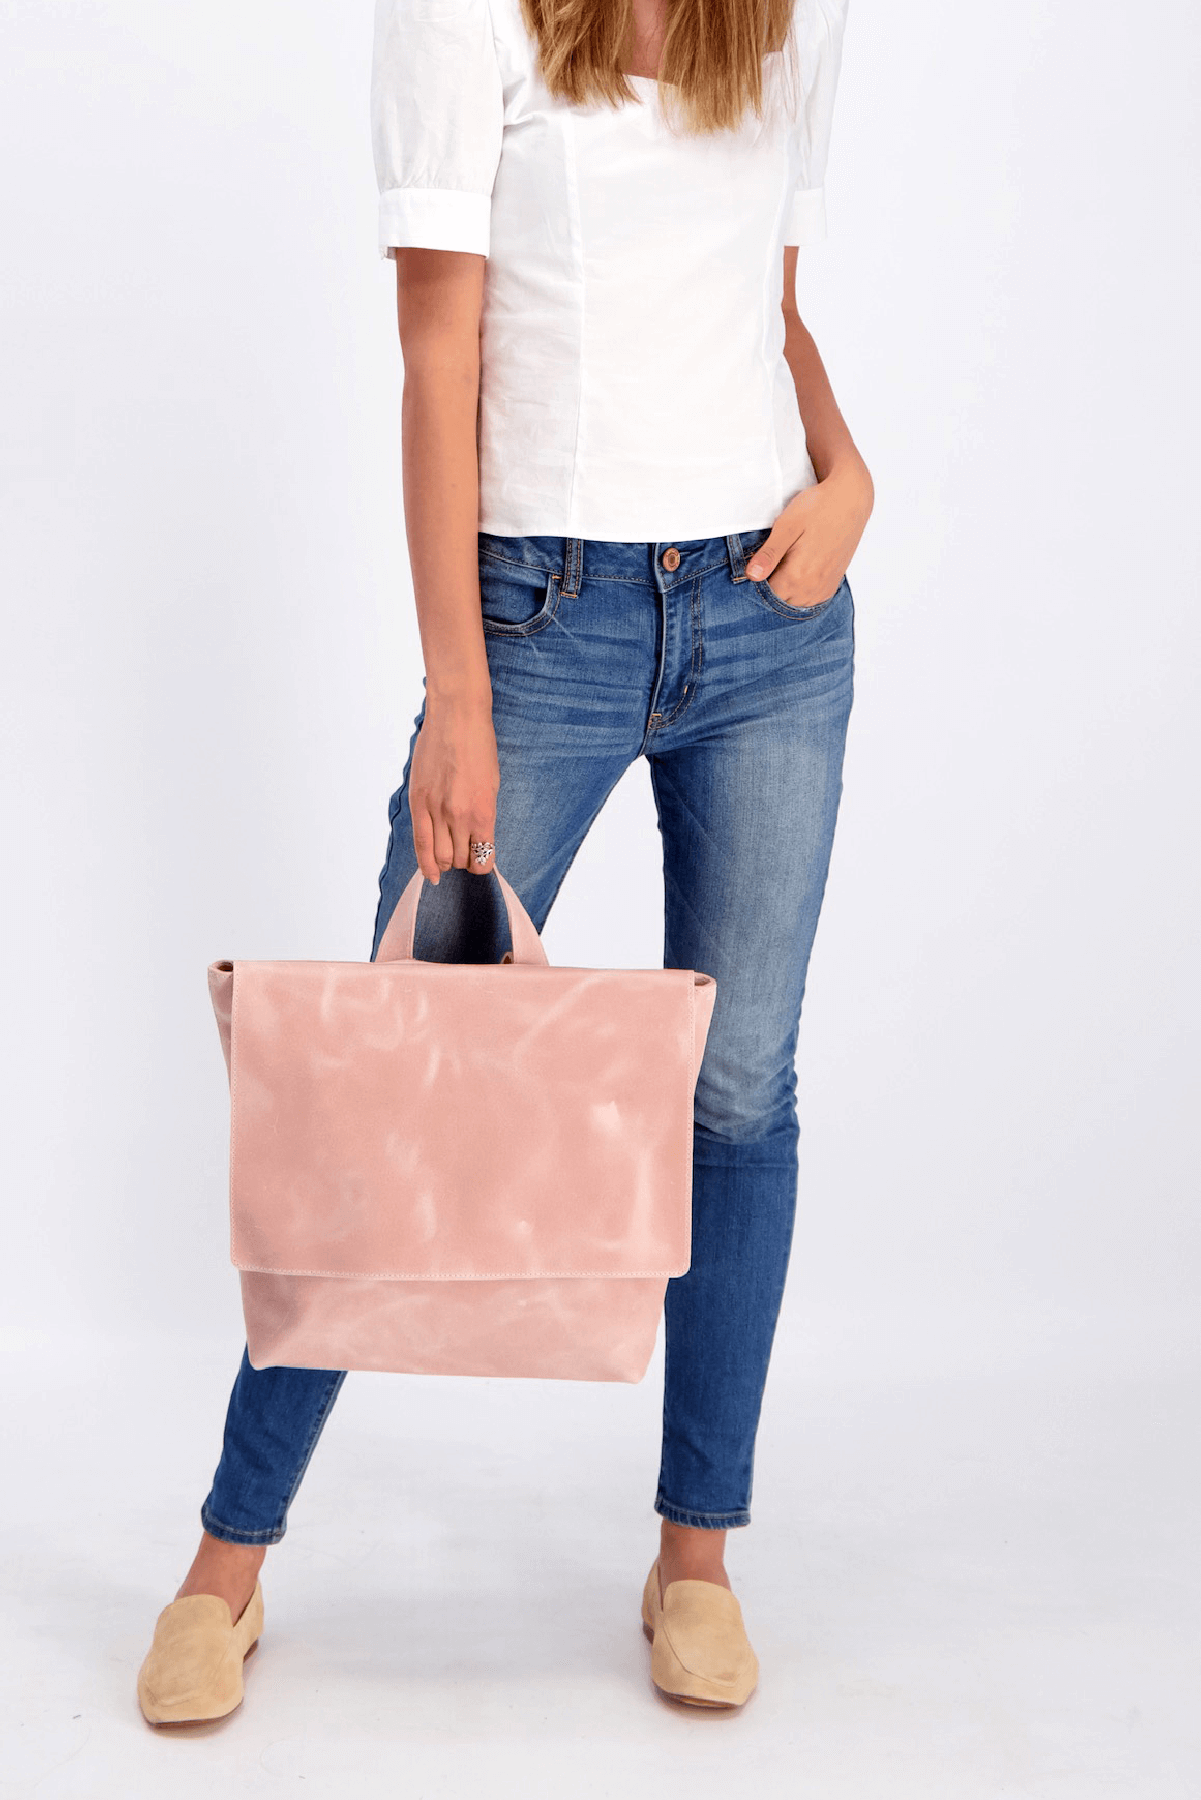 Luxury Designer Shoulder Bag Set: High Quality Nylon Leather, Armpit, Cross  Body & Tote For Men And Women From Junlv566, $6.9 | DHgate.Com